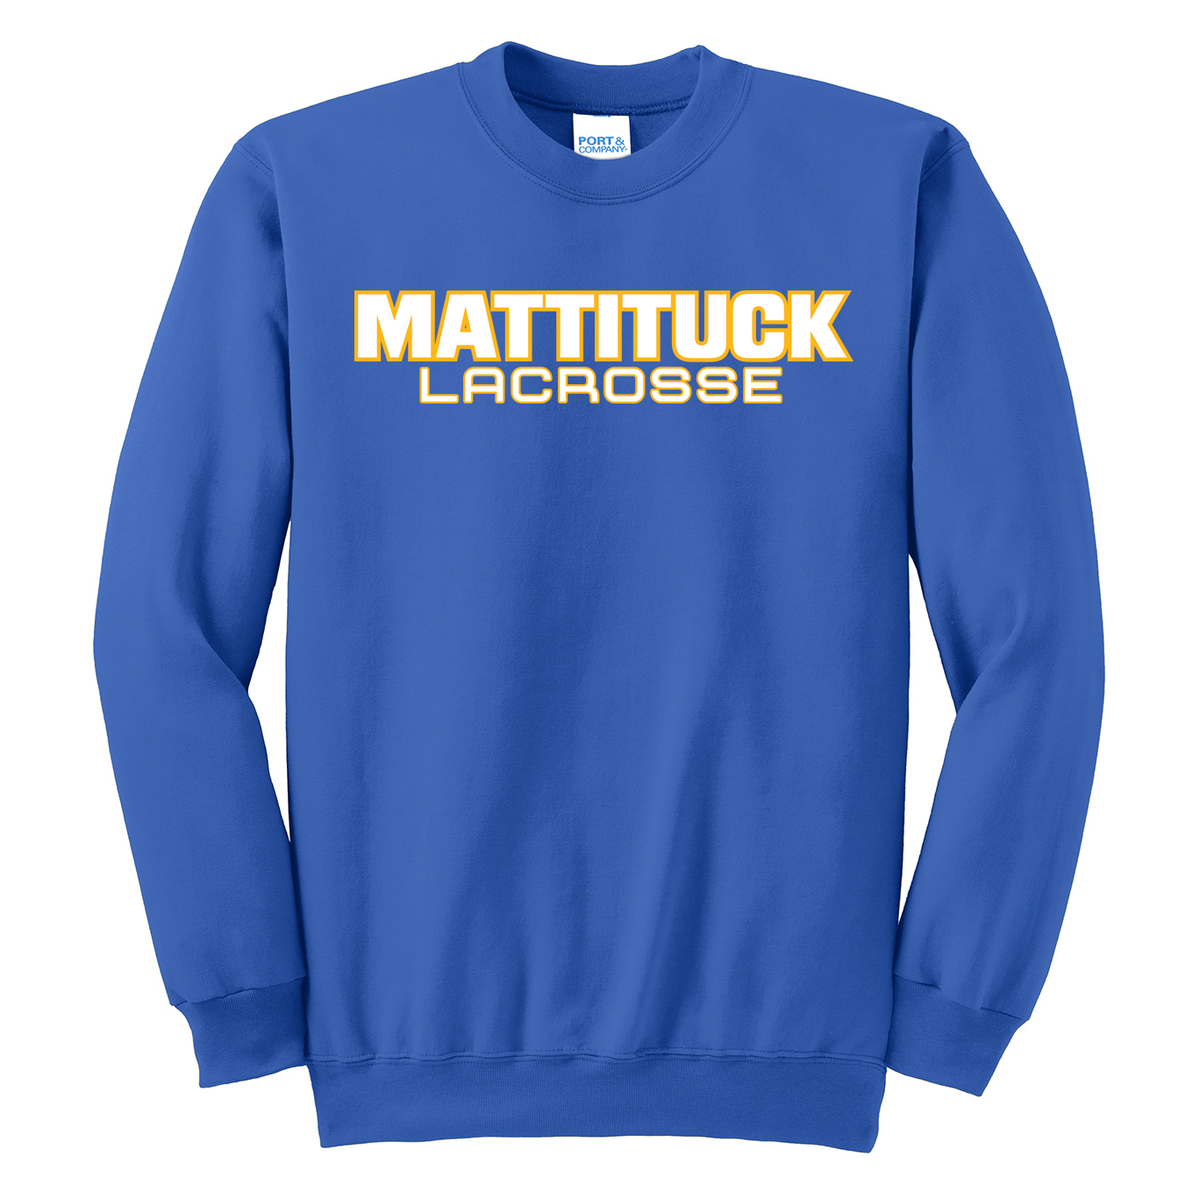 Mattituck Lacrosse Crew Neck Sweatshirt